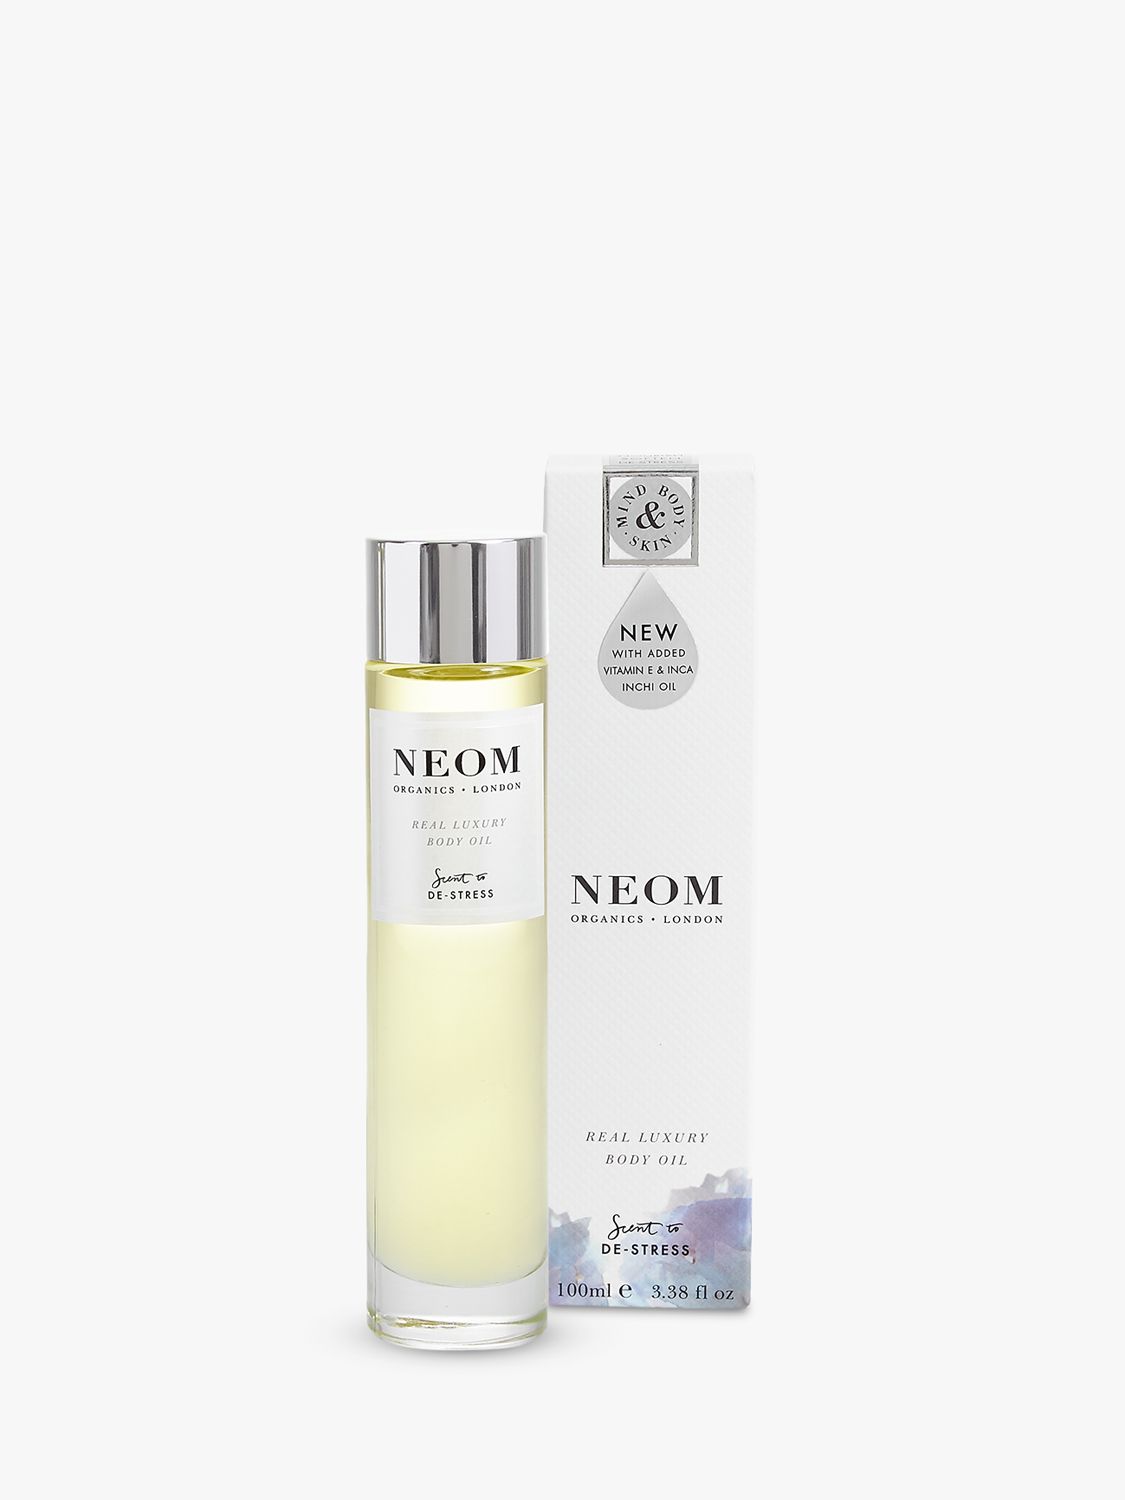 Neom Organics London Real Luxury Vitamin Body Oil, 100ml